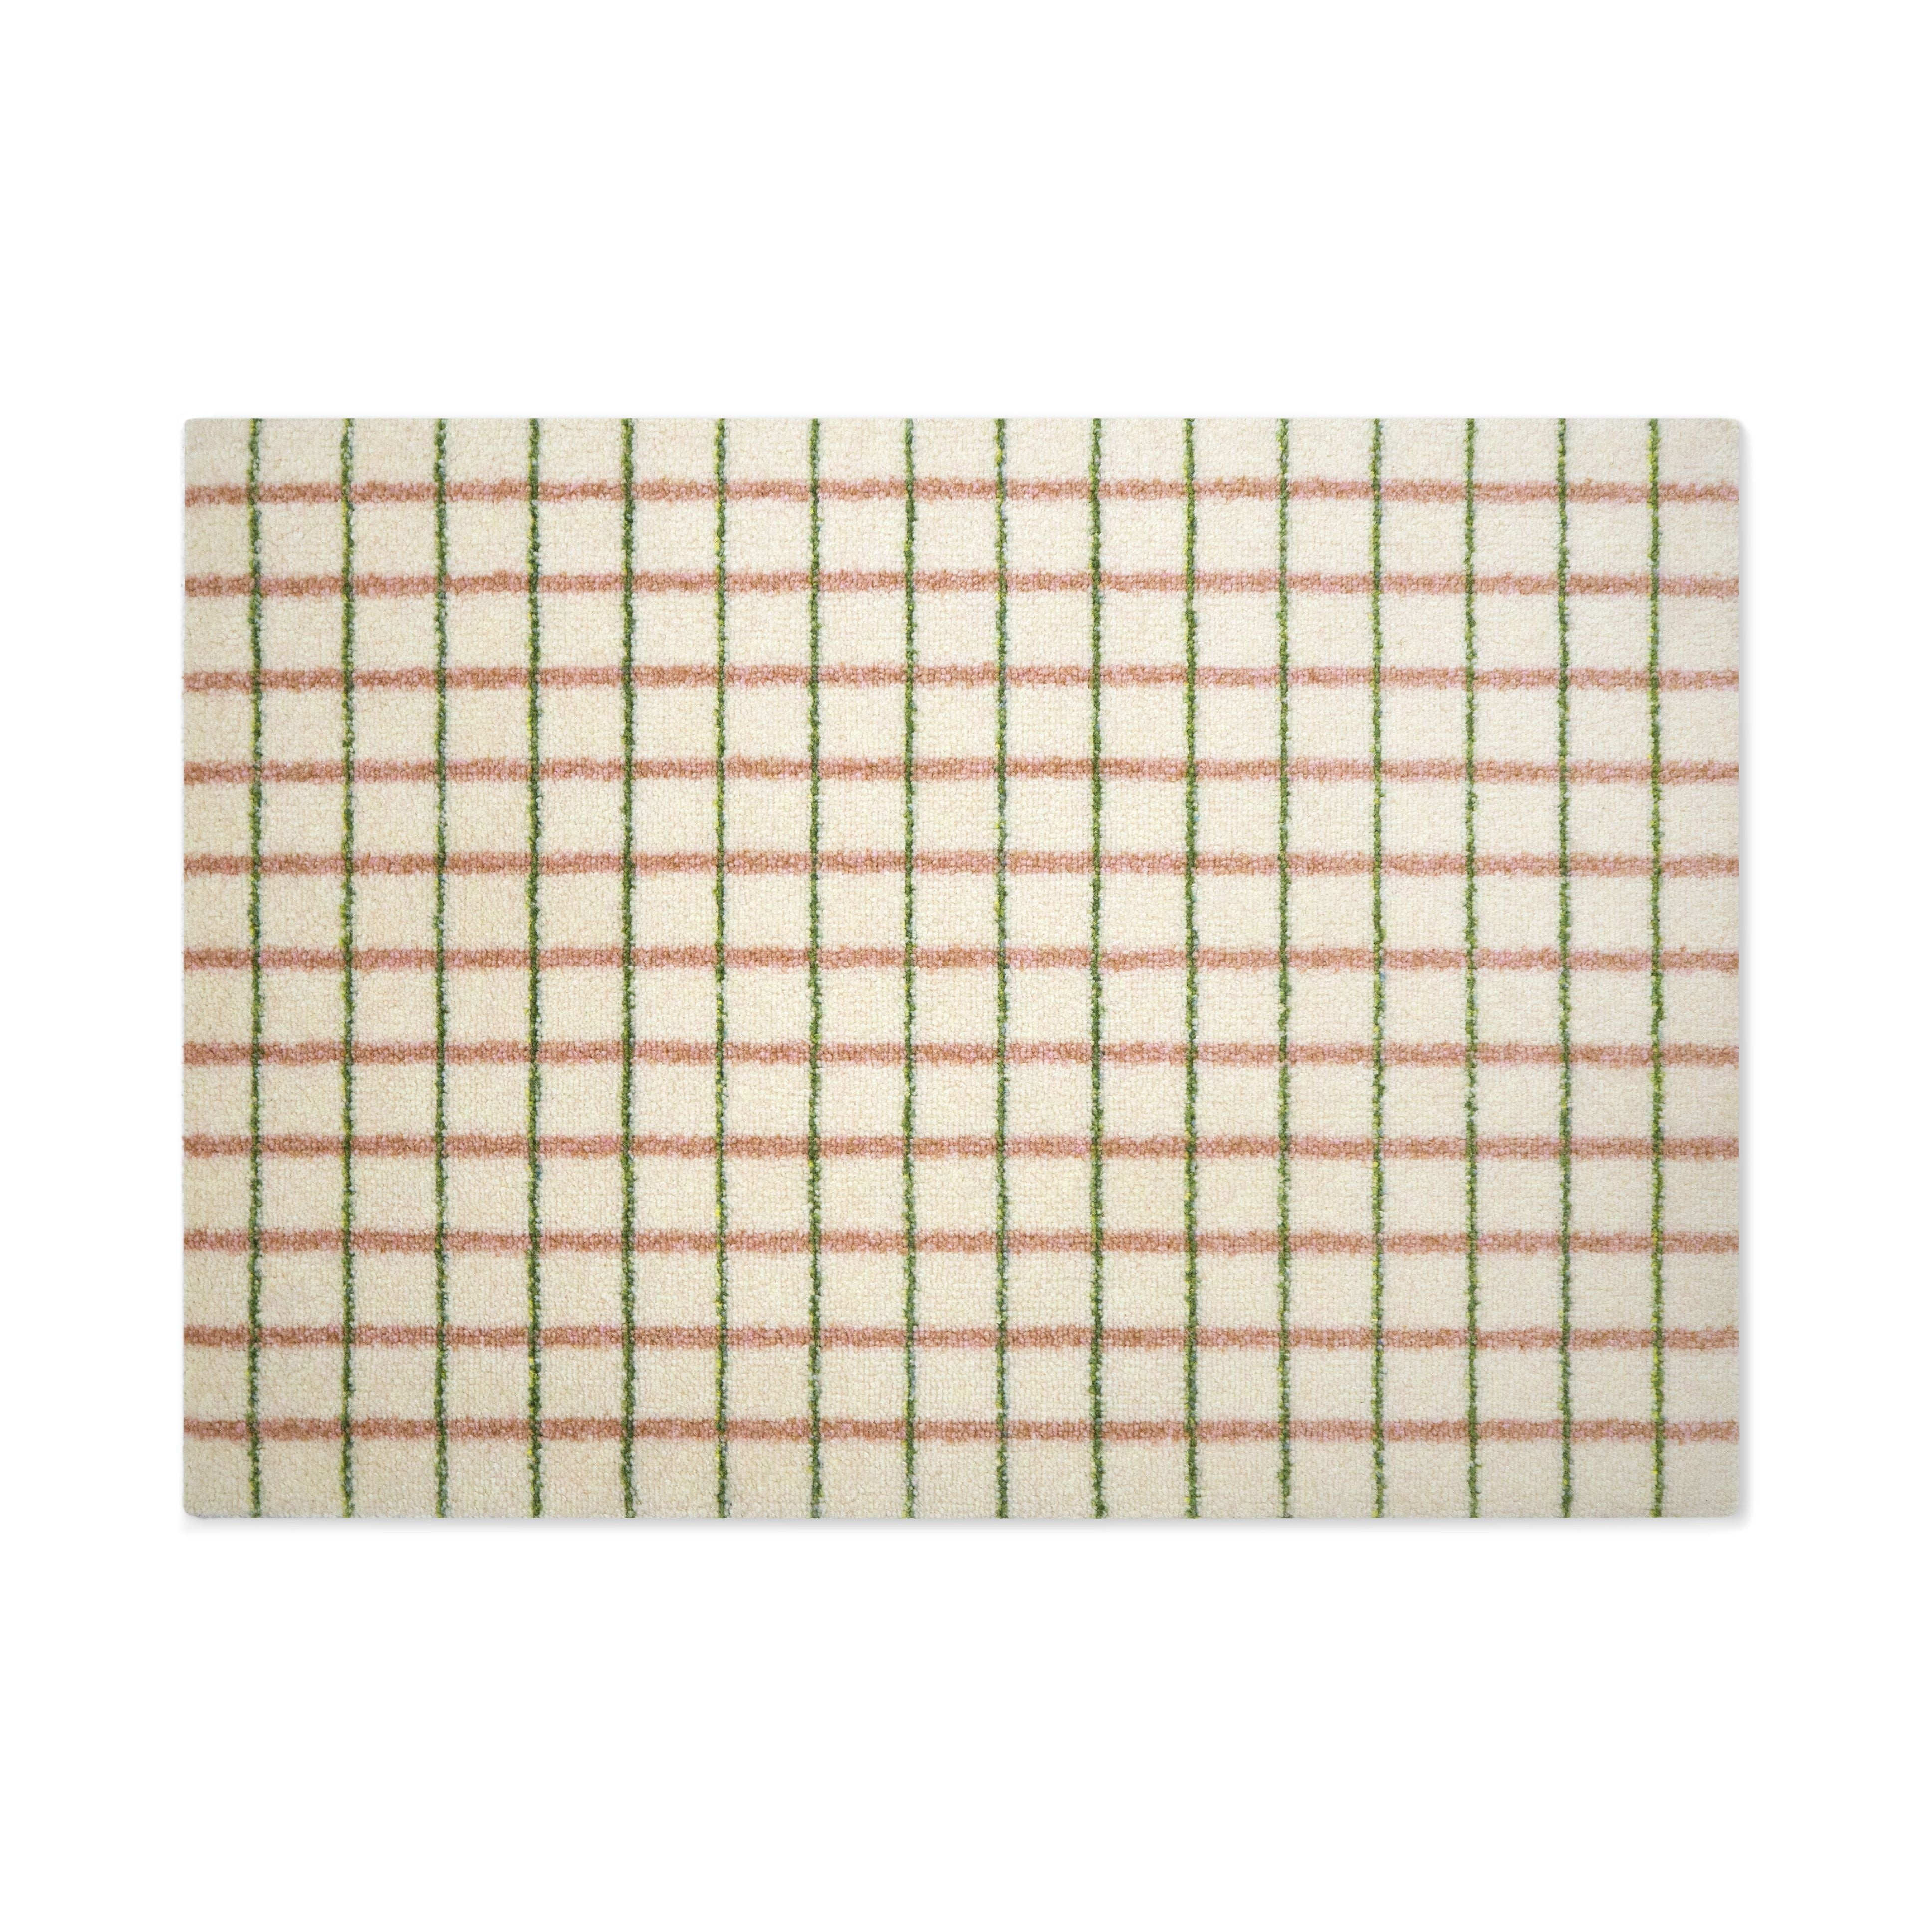 Heymat Grid Doormat Lime Candycane, 85x115 Cm